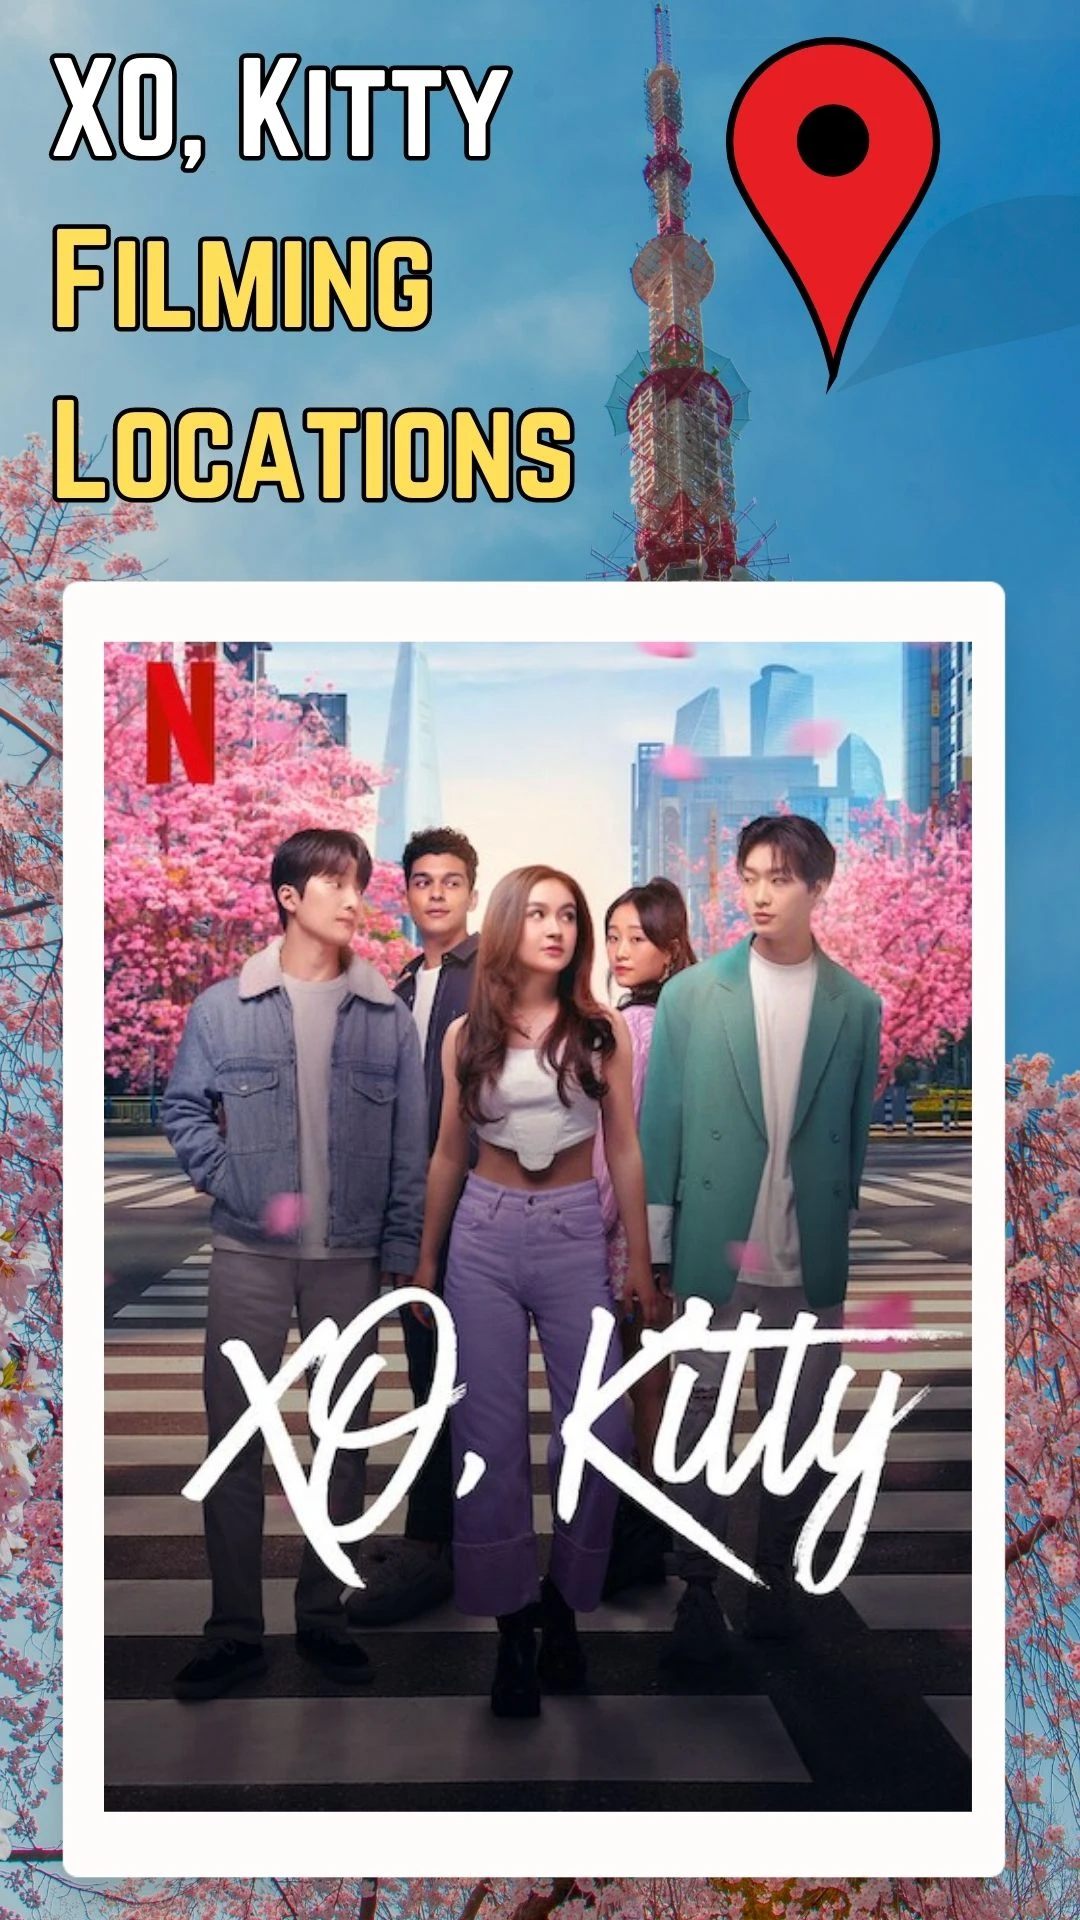 XO, Kitty Filming Locations